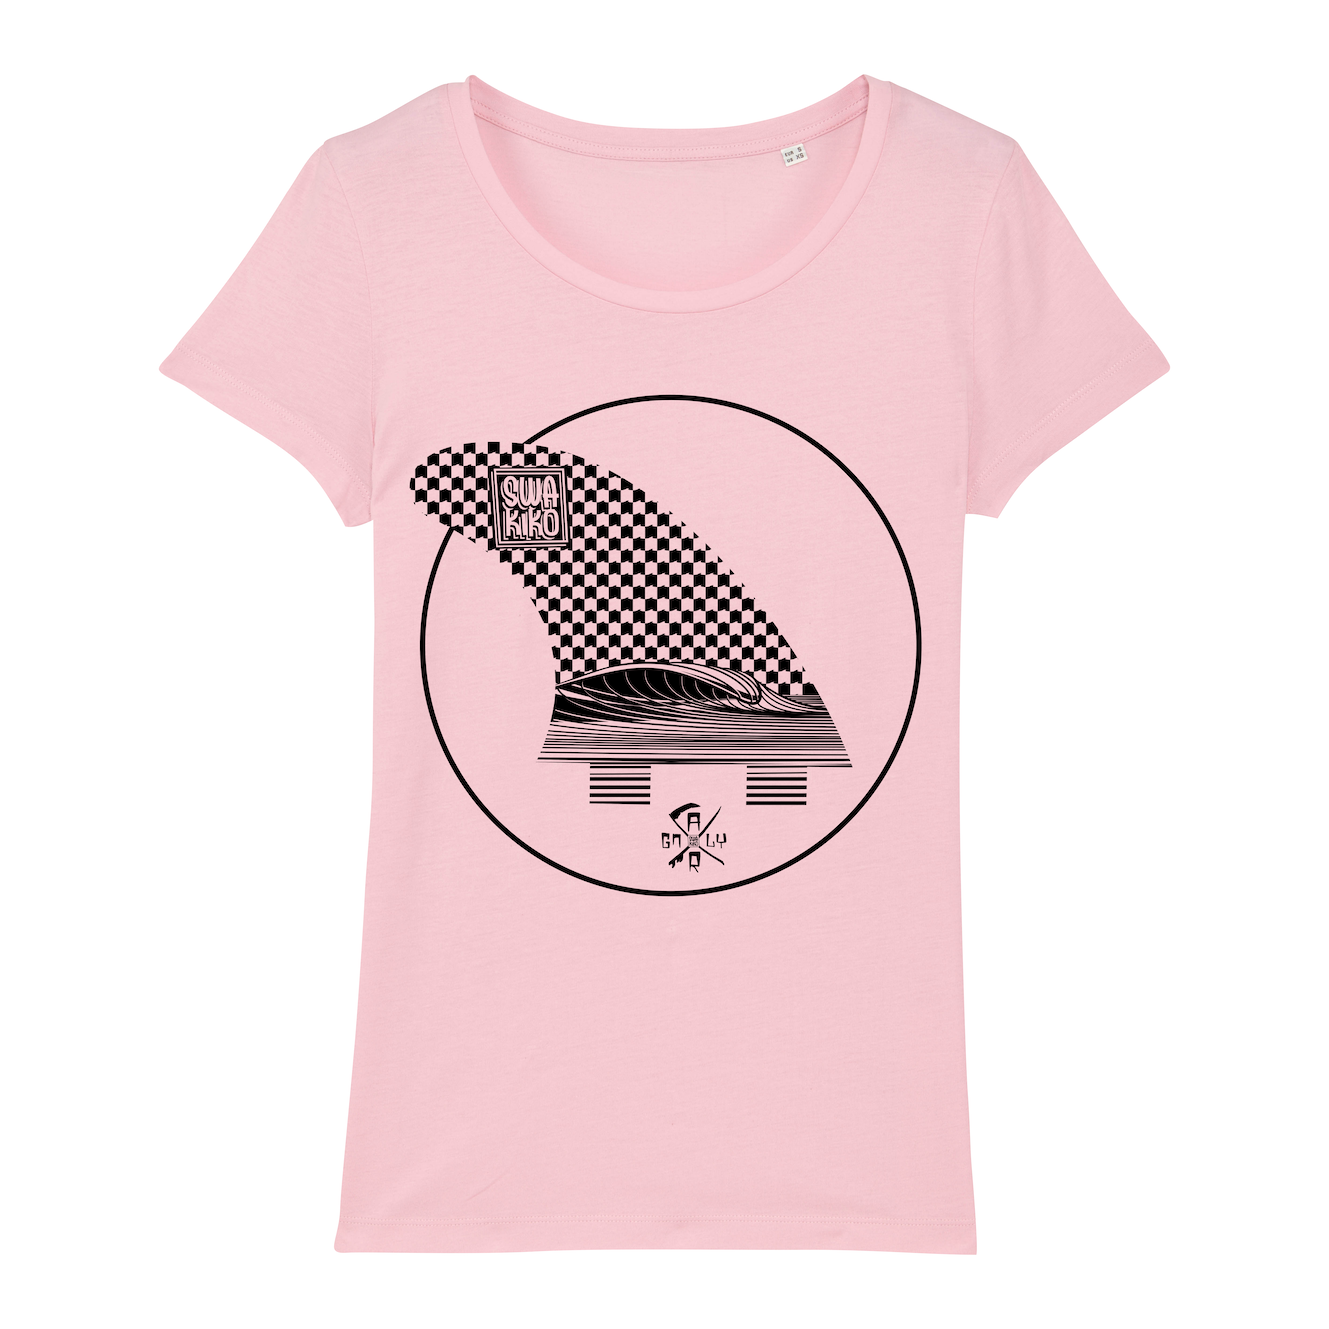 Surf t-shirt women pink, Dark wave fin